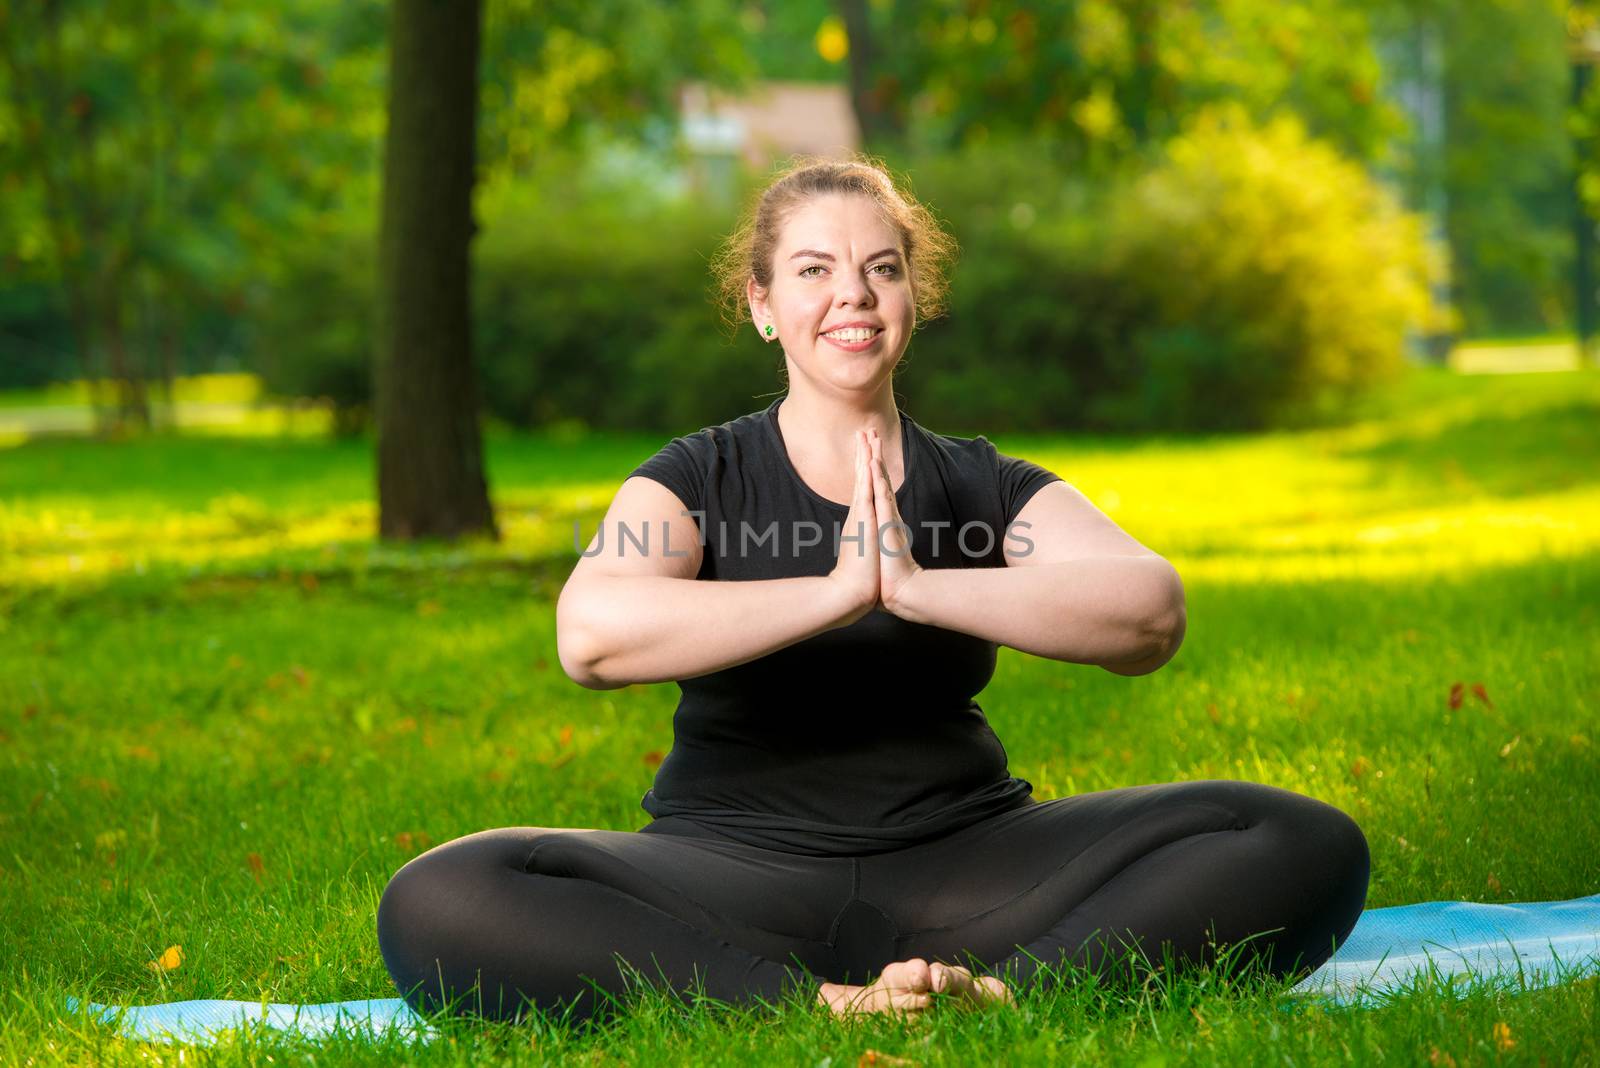 plus size woman posing in park performing exercises in lotus pos by kosmsos111